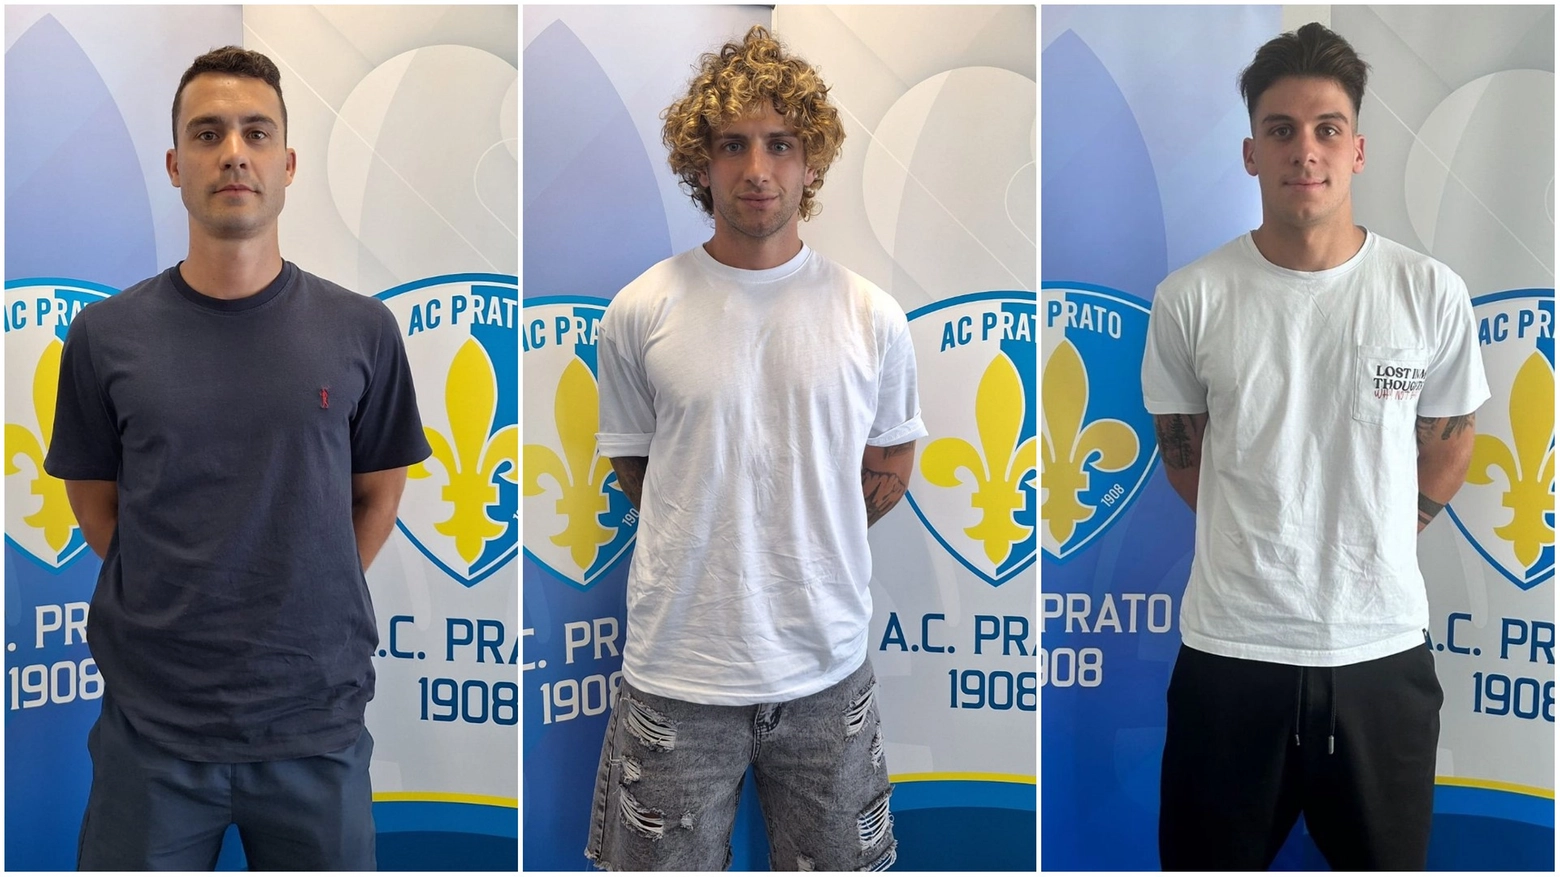 Da sinistra Filippo Gemmi, Emanuele Matteucci e Gian Marco Fantoni